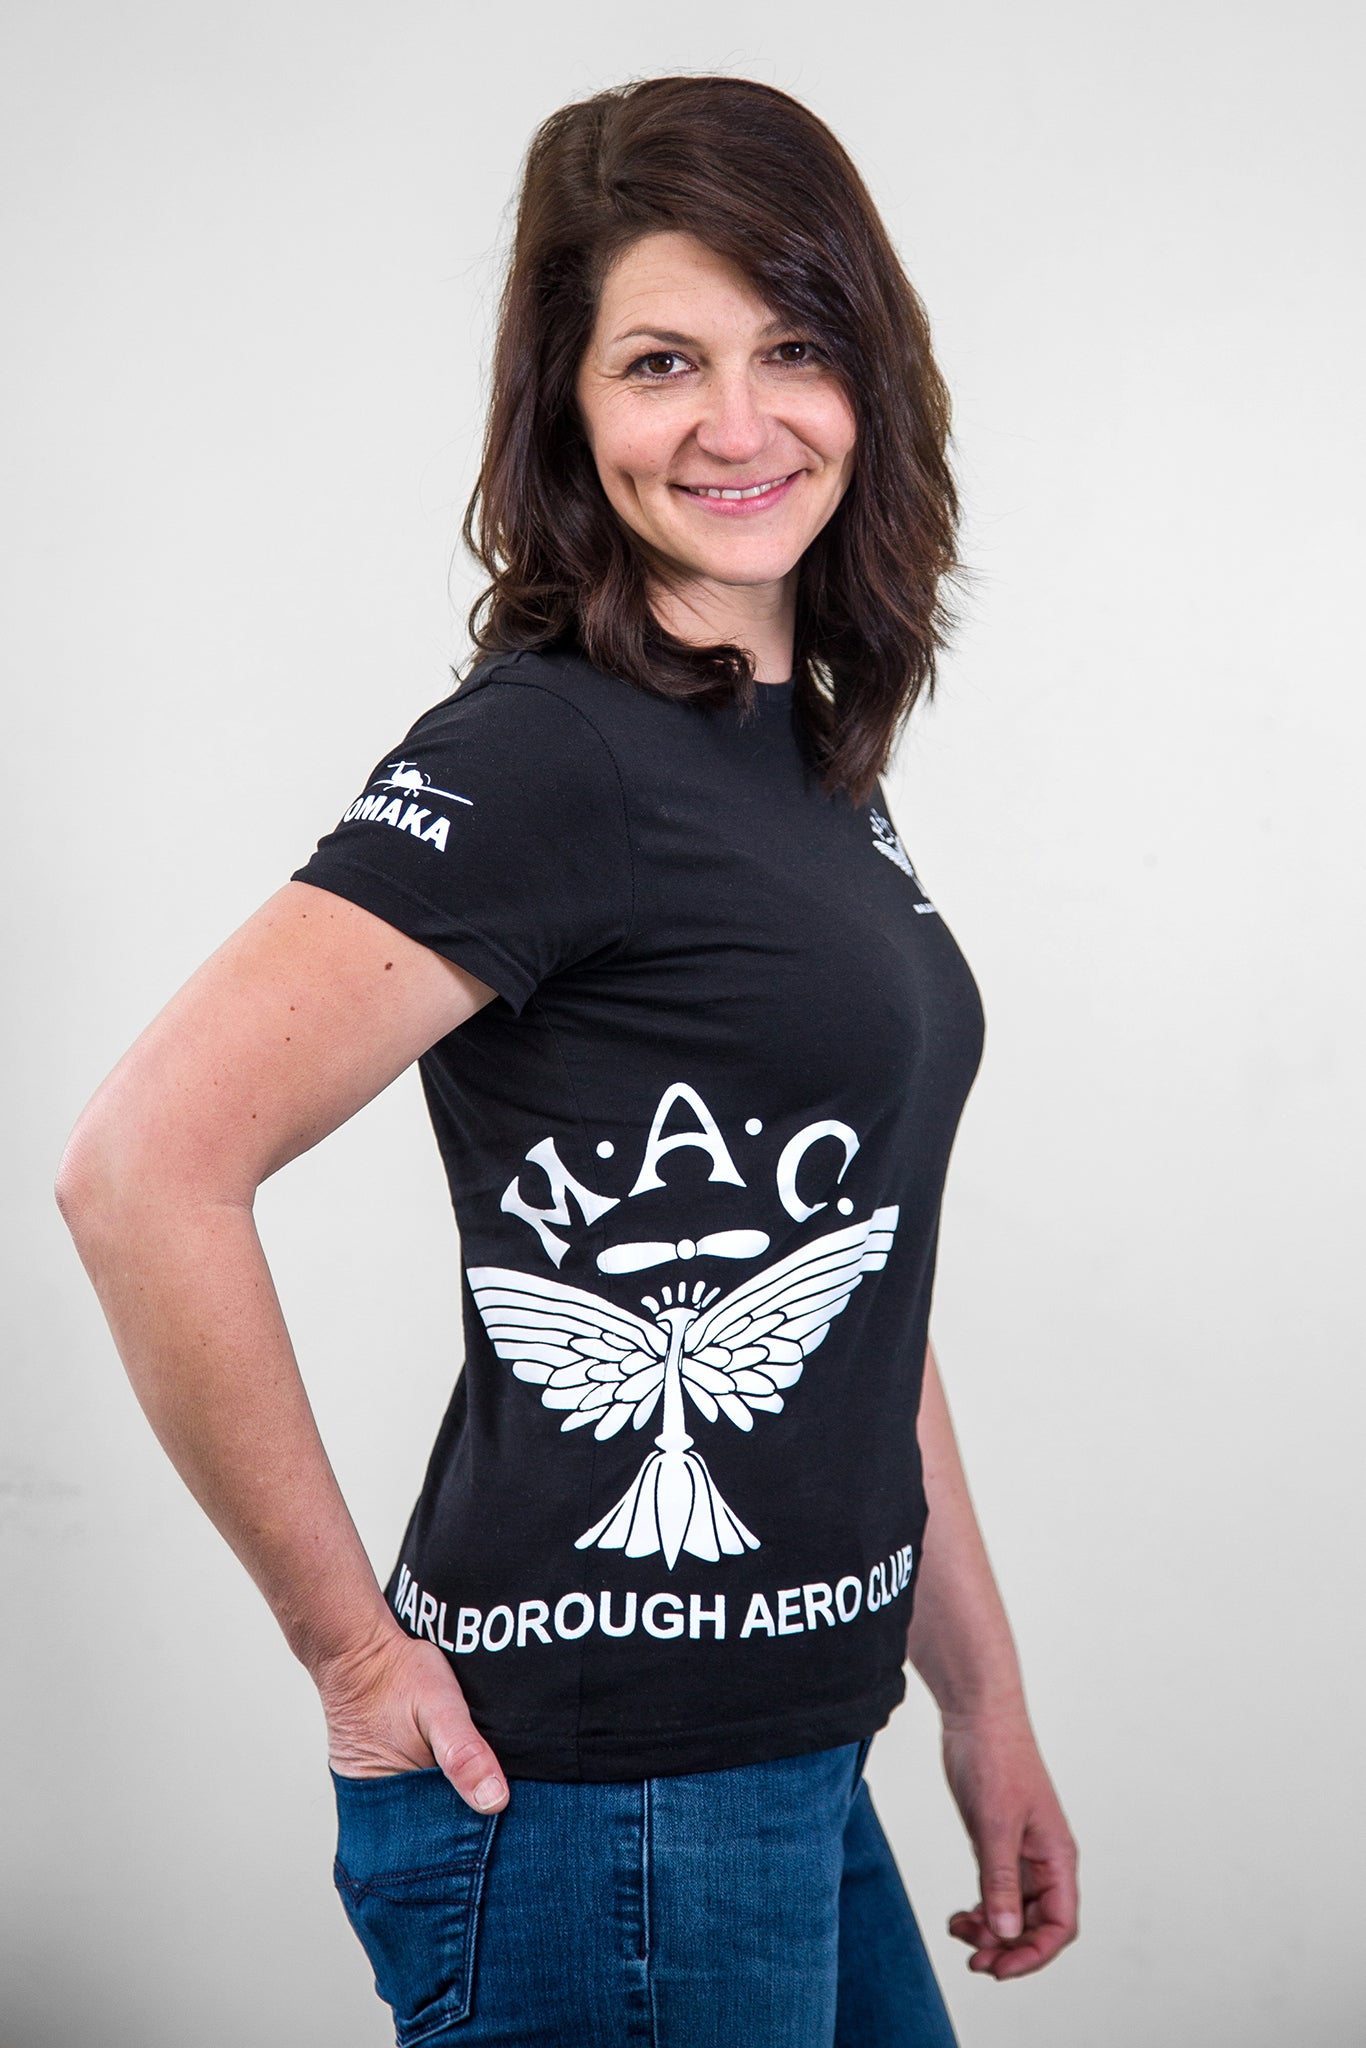 Marlborough Aero Club woman's printed tee shirt